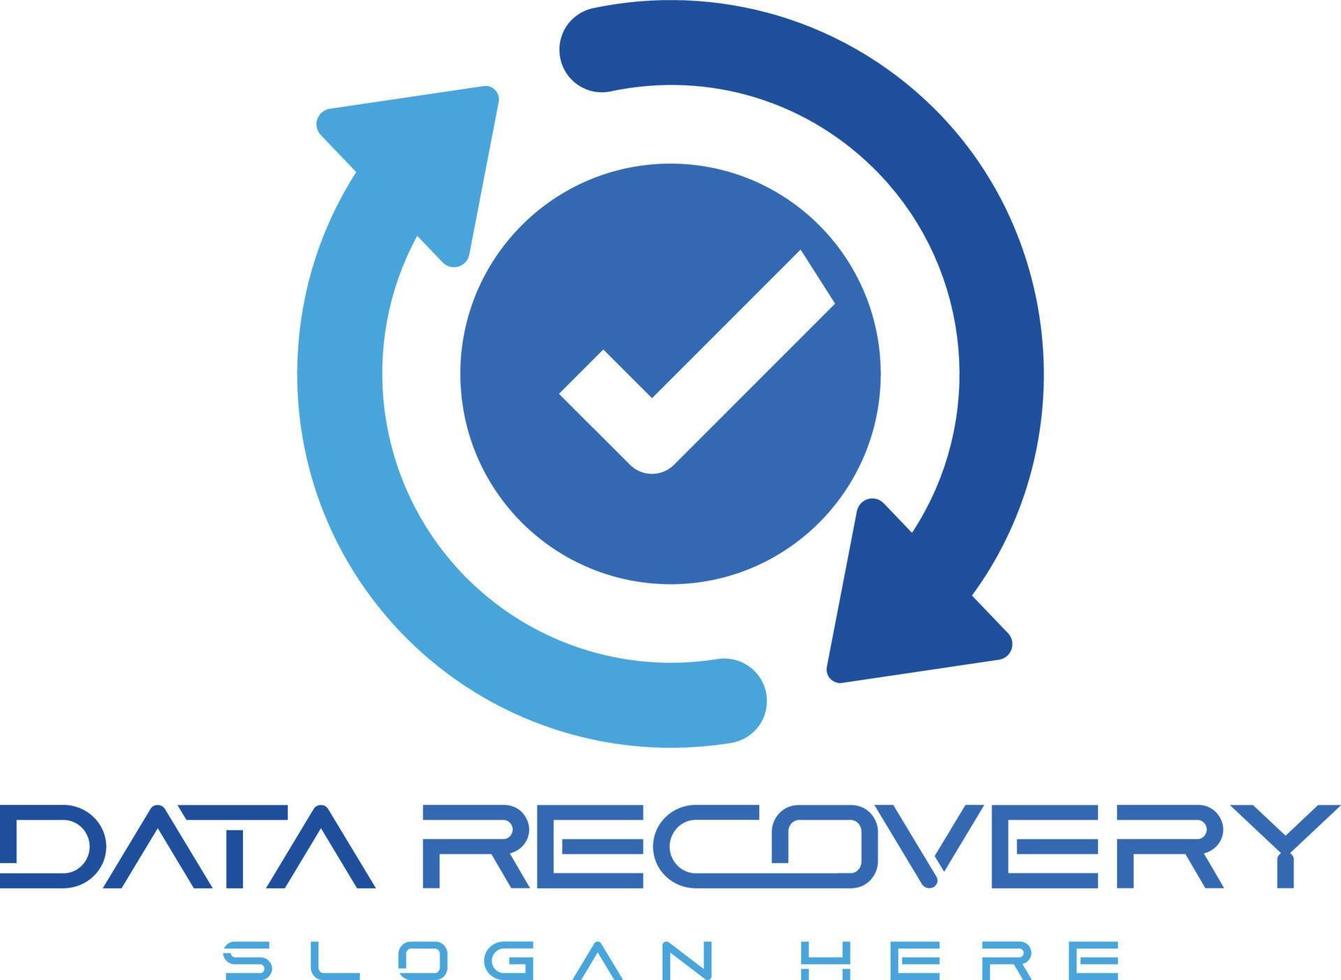 Data recovery, data recovery logo, Data, logo vector